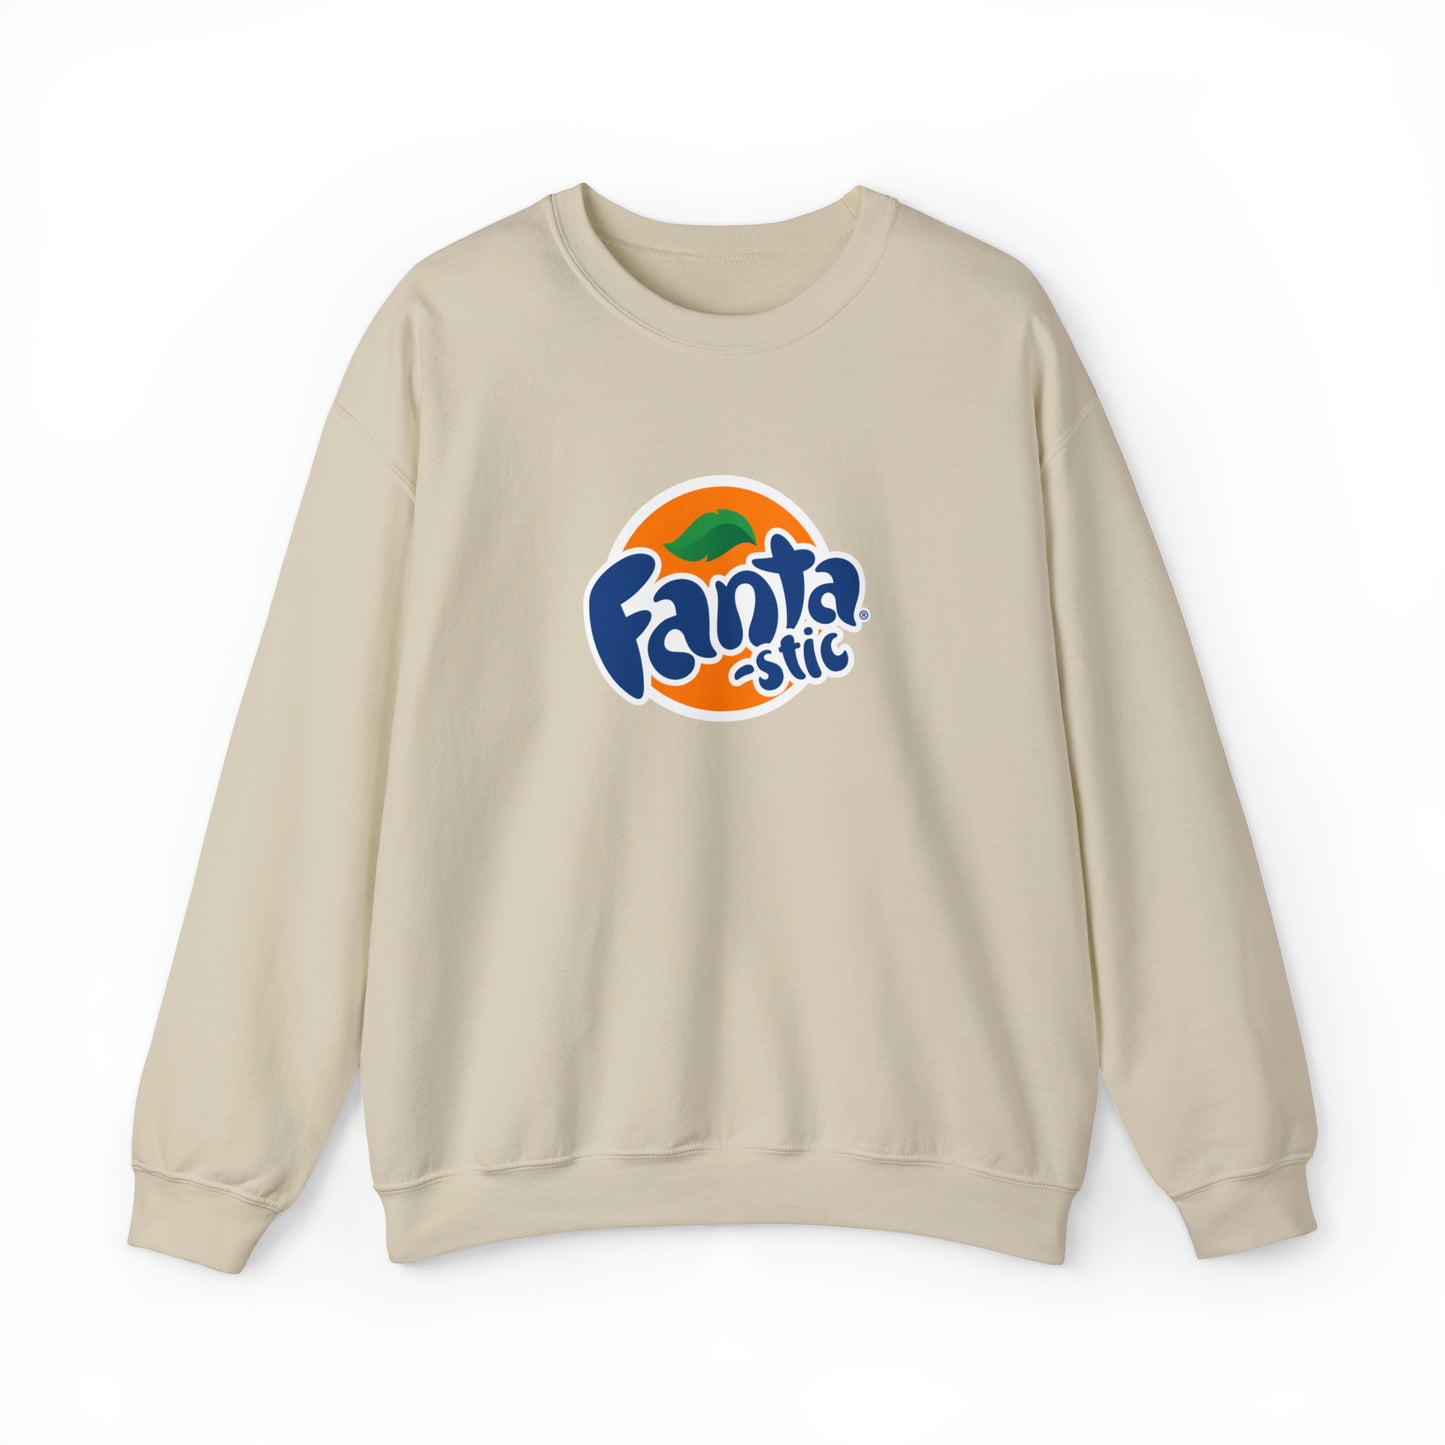 Custom Parody Crewneck Sweatshirt, Fanta-stic Design